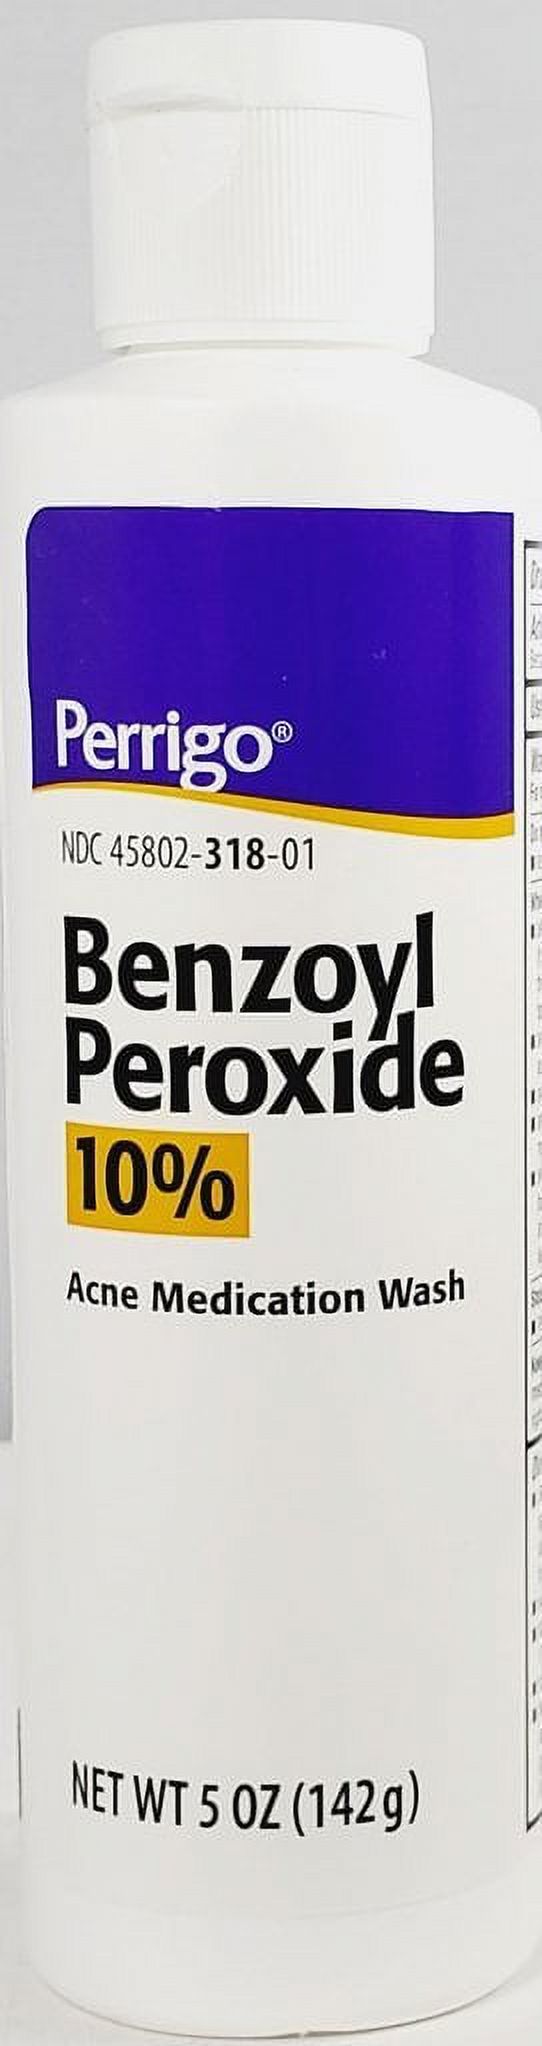 Perrigo Benzoyl Peroxide 10% Acne Treatment Medication Face Wash, 5 oz - image 1 of 5